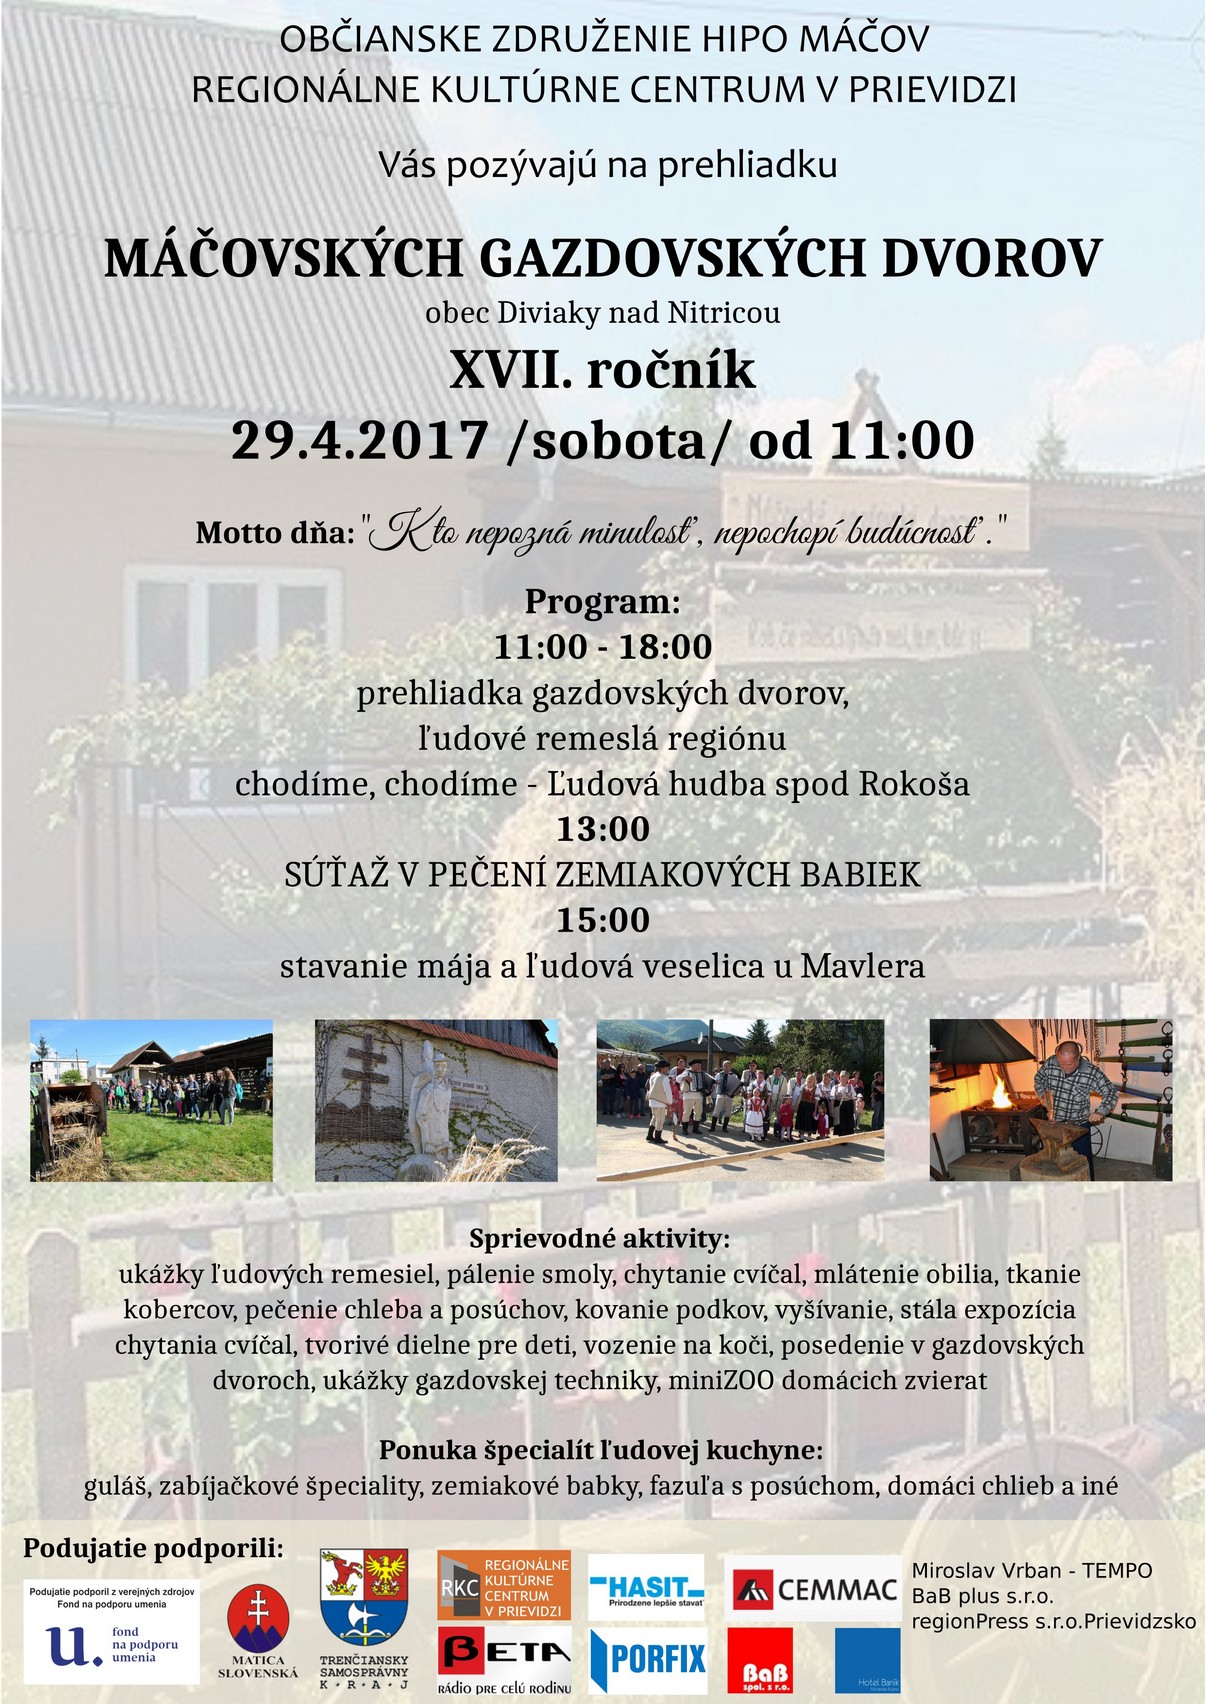 Movsk gazdovsk dvory Diviaky nad Nitricou 2017 - 17. ronk